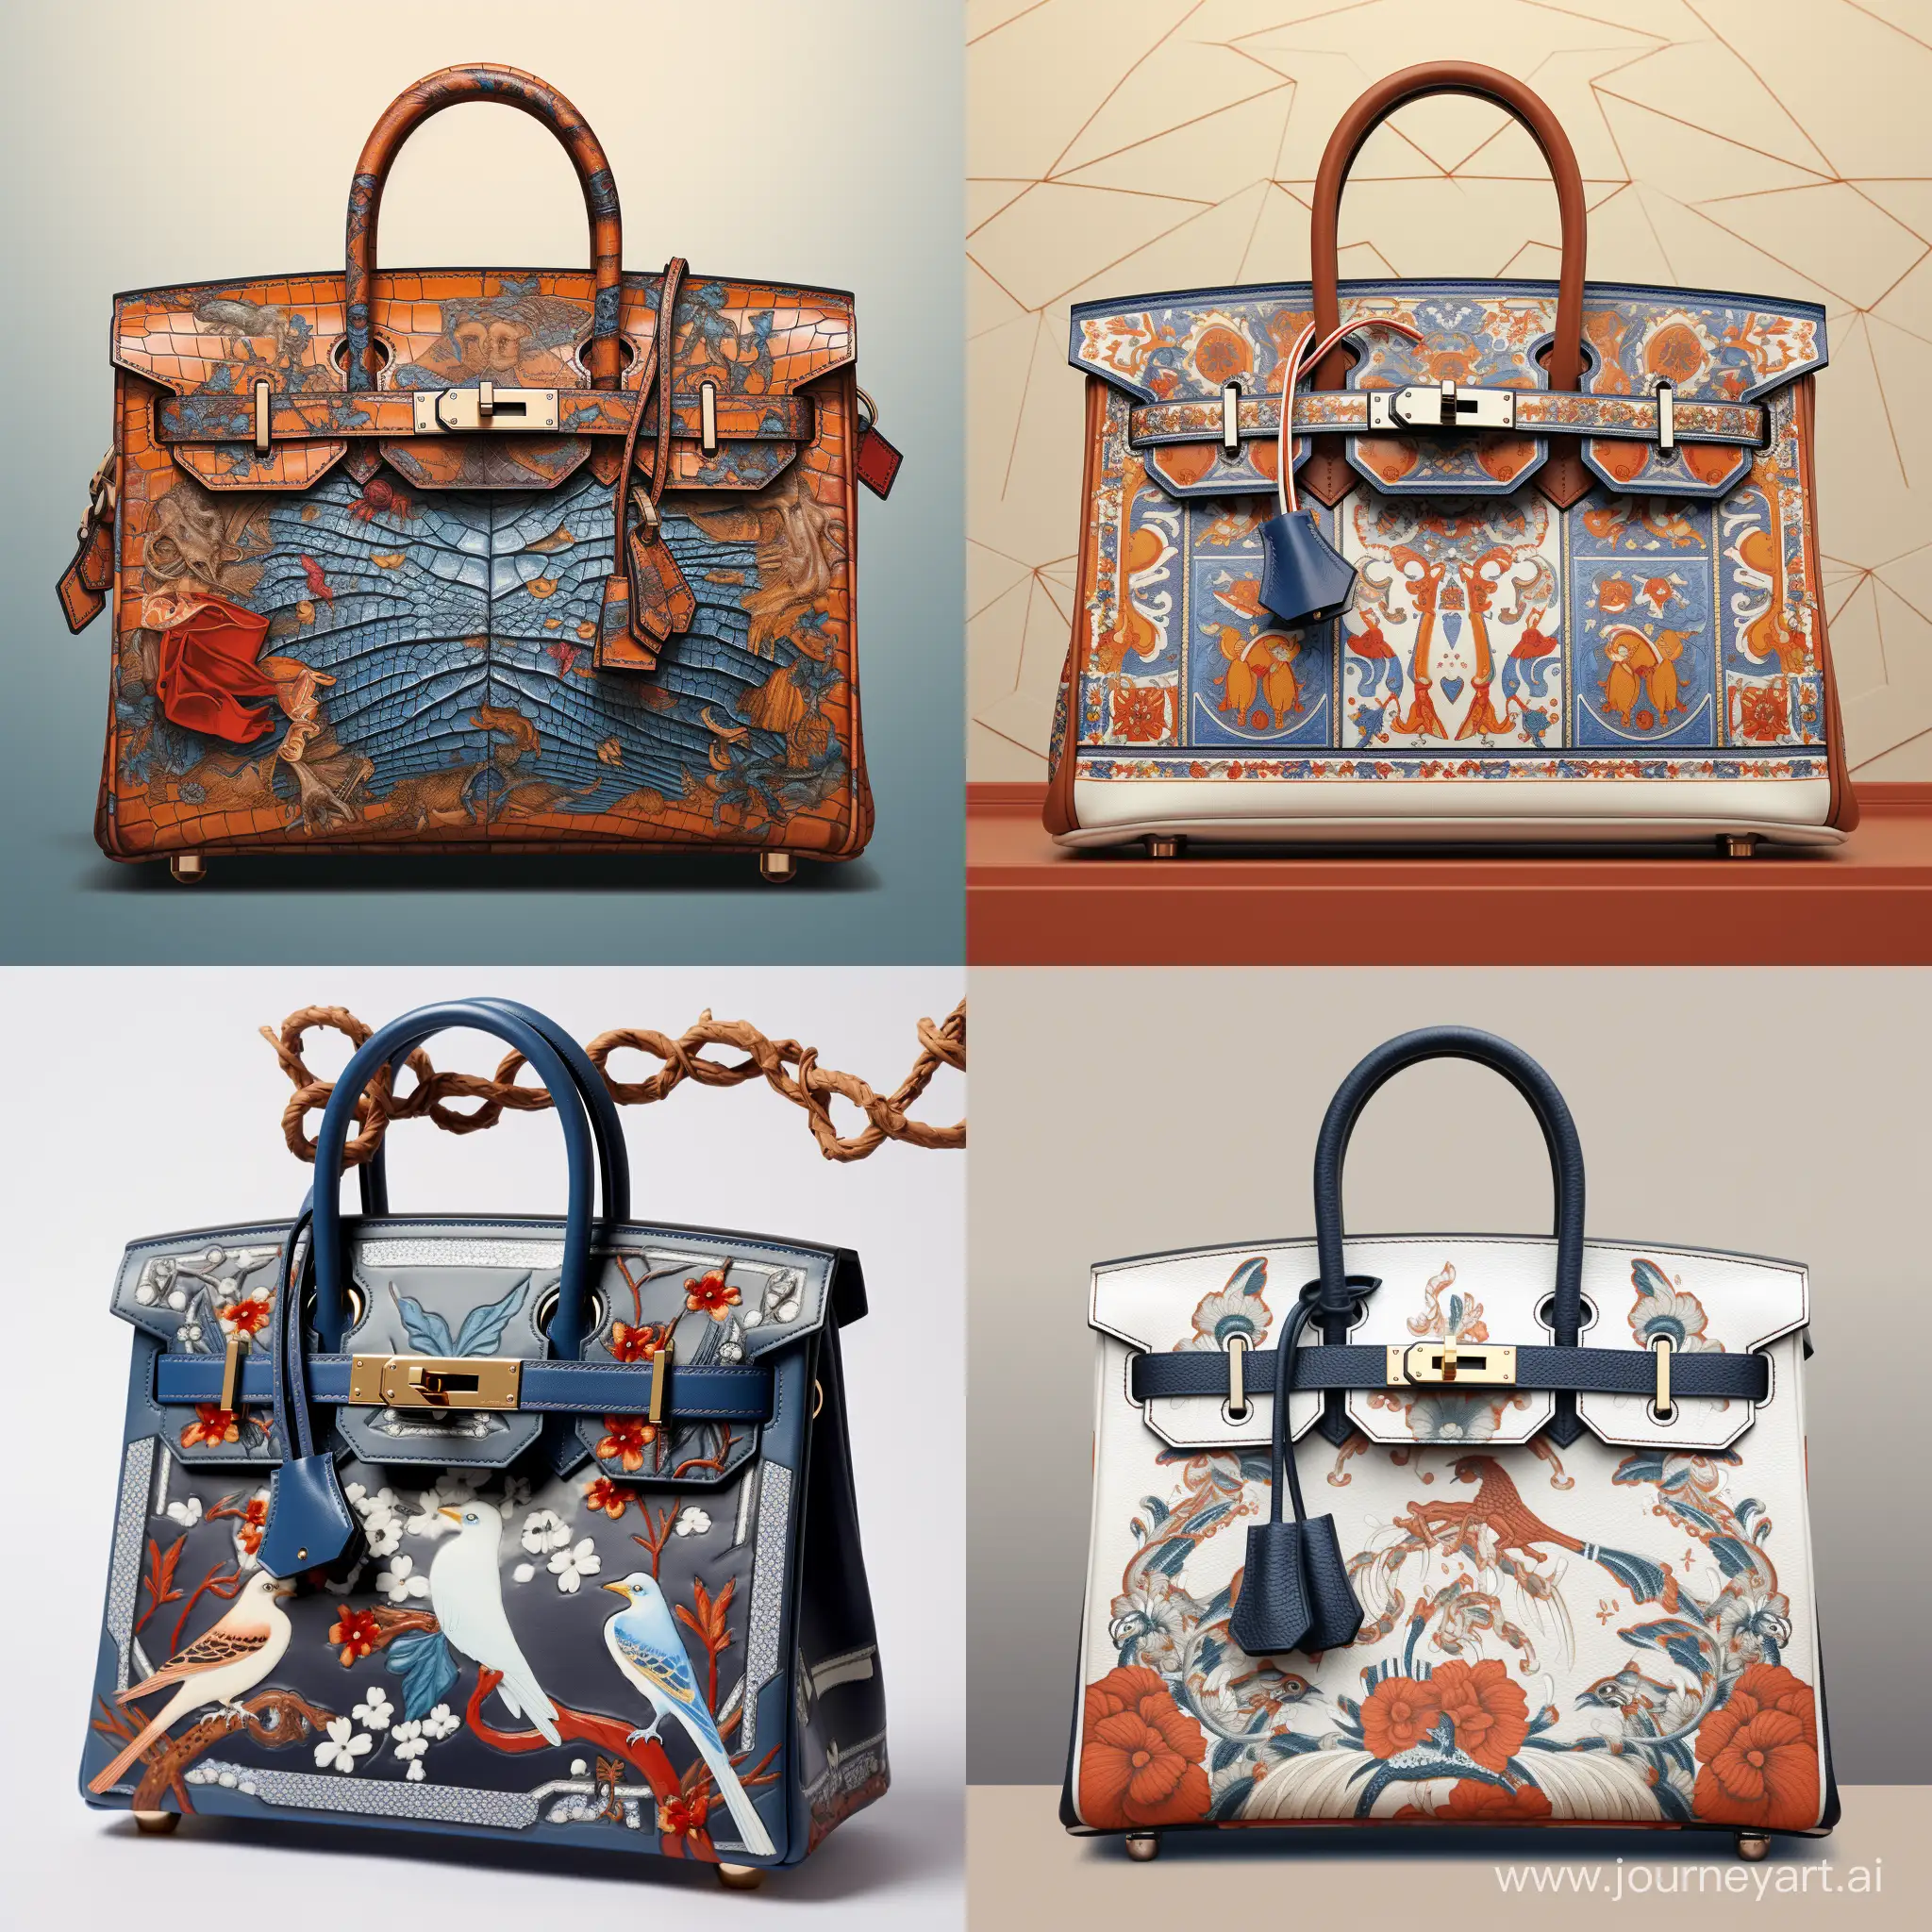 Luxurious-Handcrafted-Hermes-Birkin-and-Balenciaga-Inspired-Bag-Replica